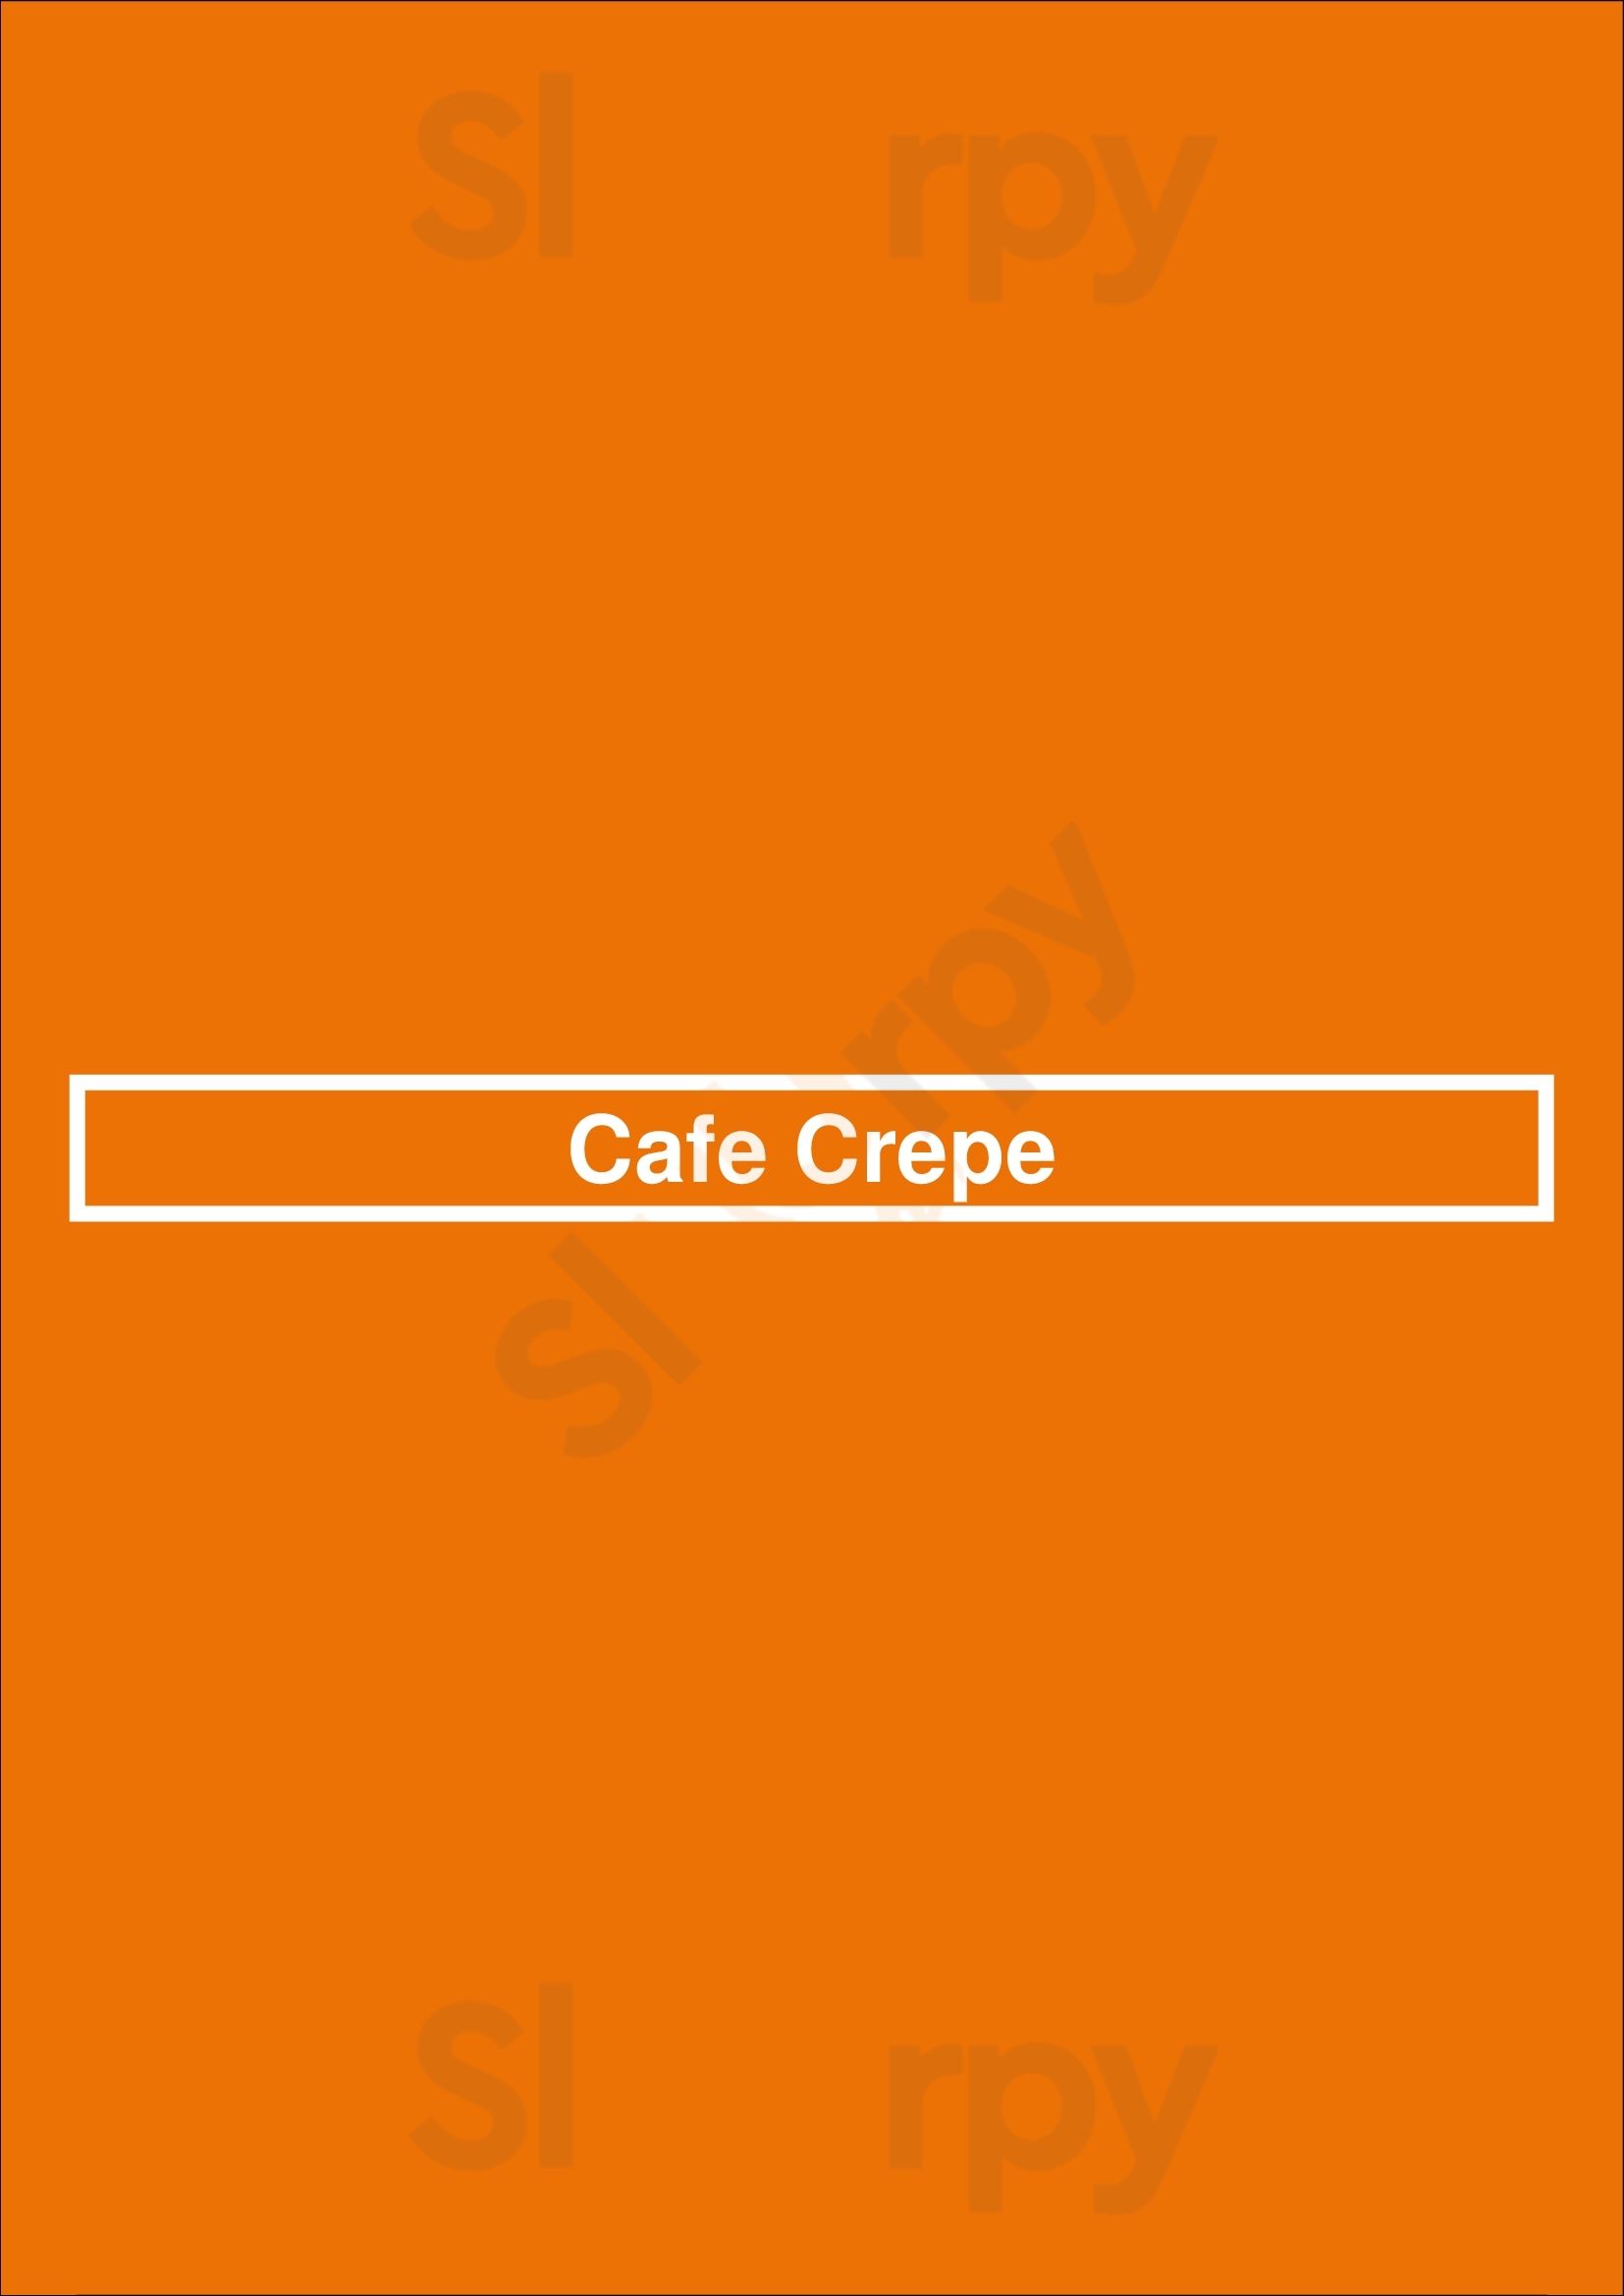 Cafe Crepe Los Angeles Menu - 1